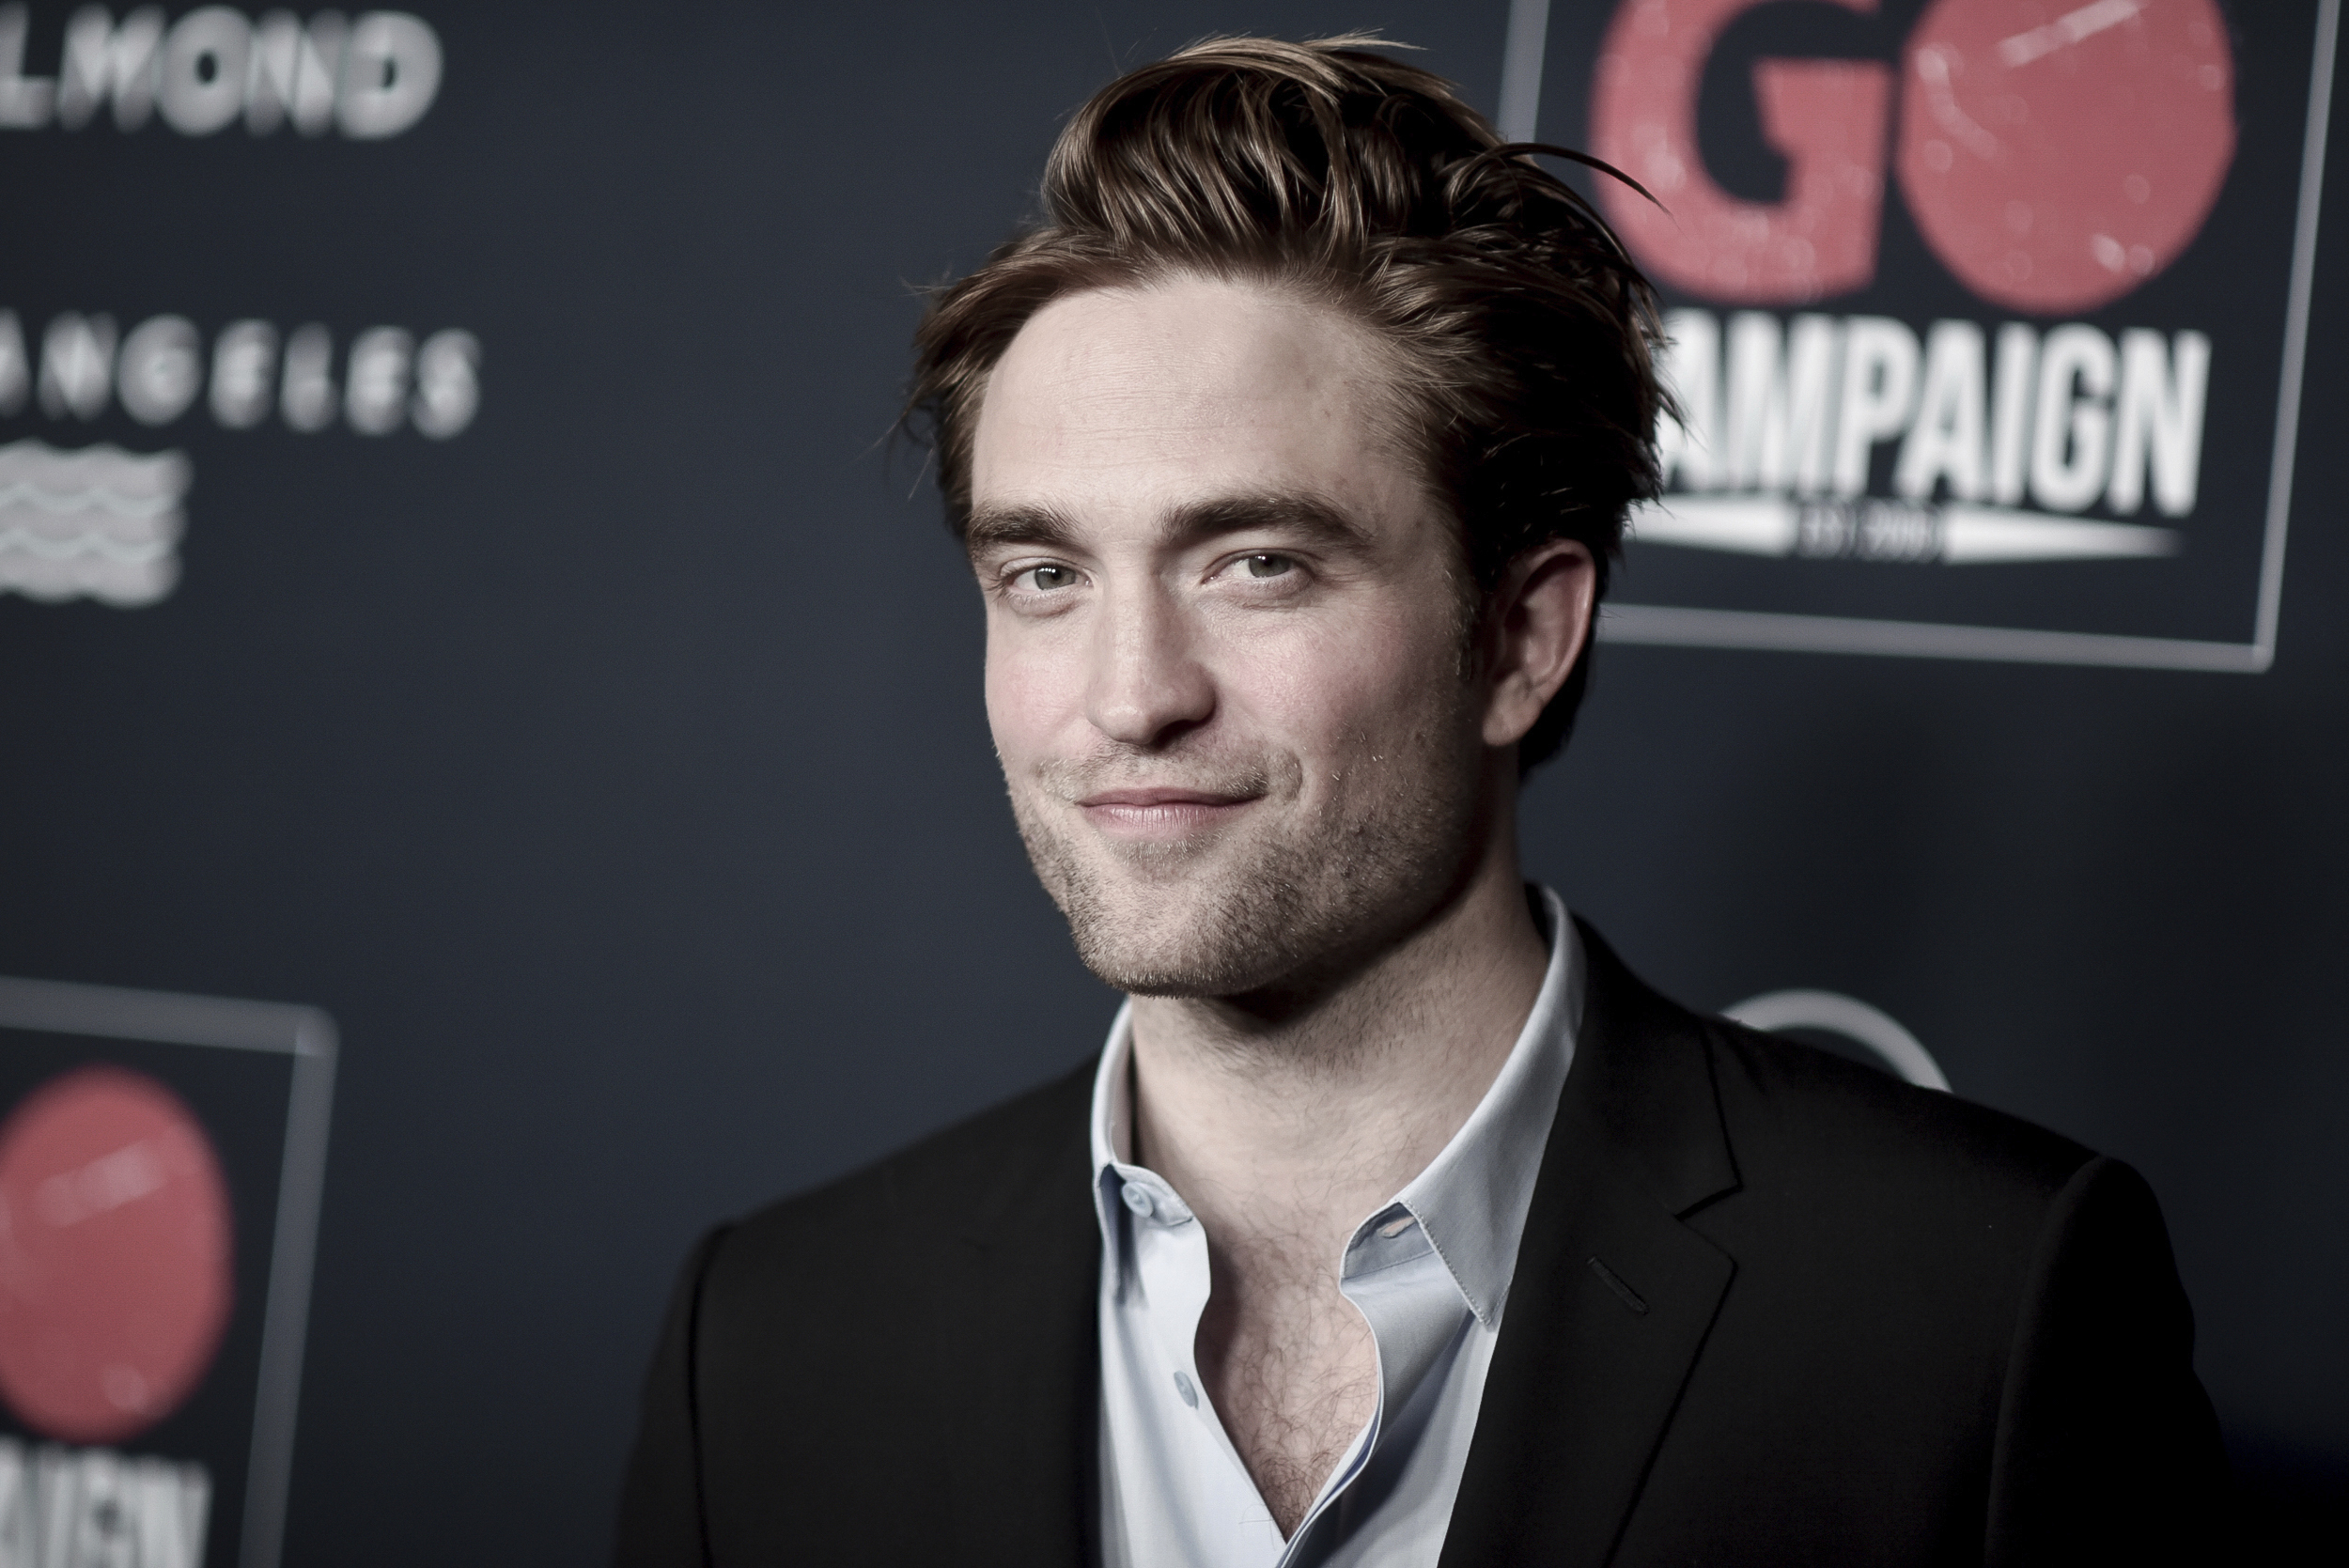  People News Roundup: Robert Pattinson's positive test on 'Batman' set underscores challenges for Hollywood